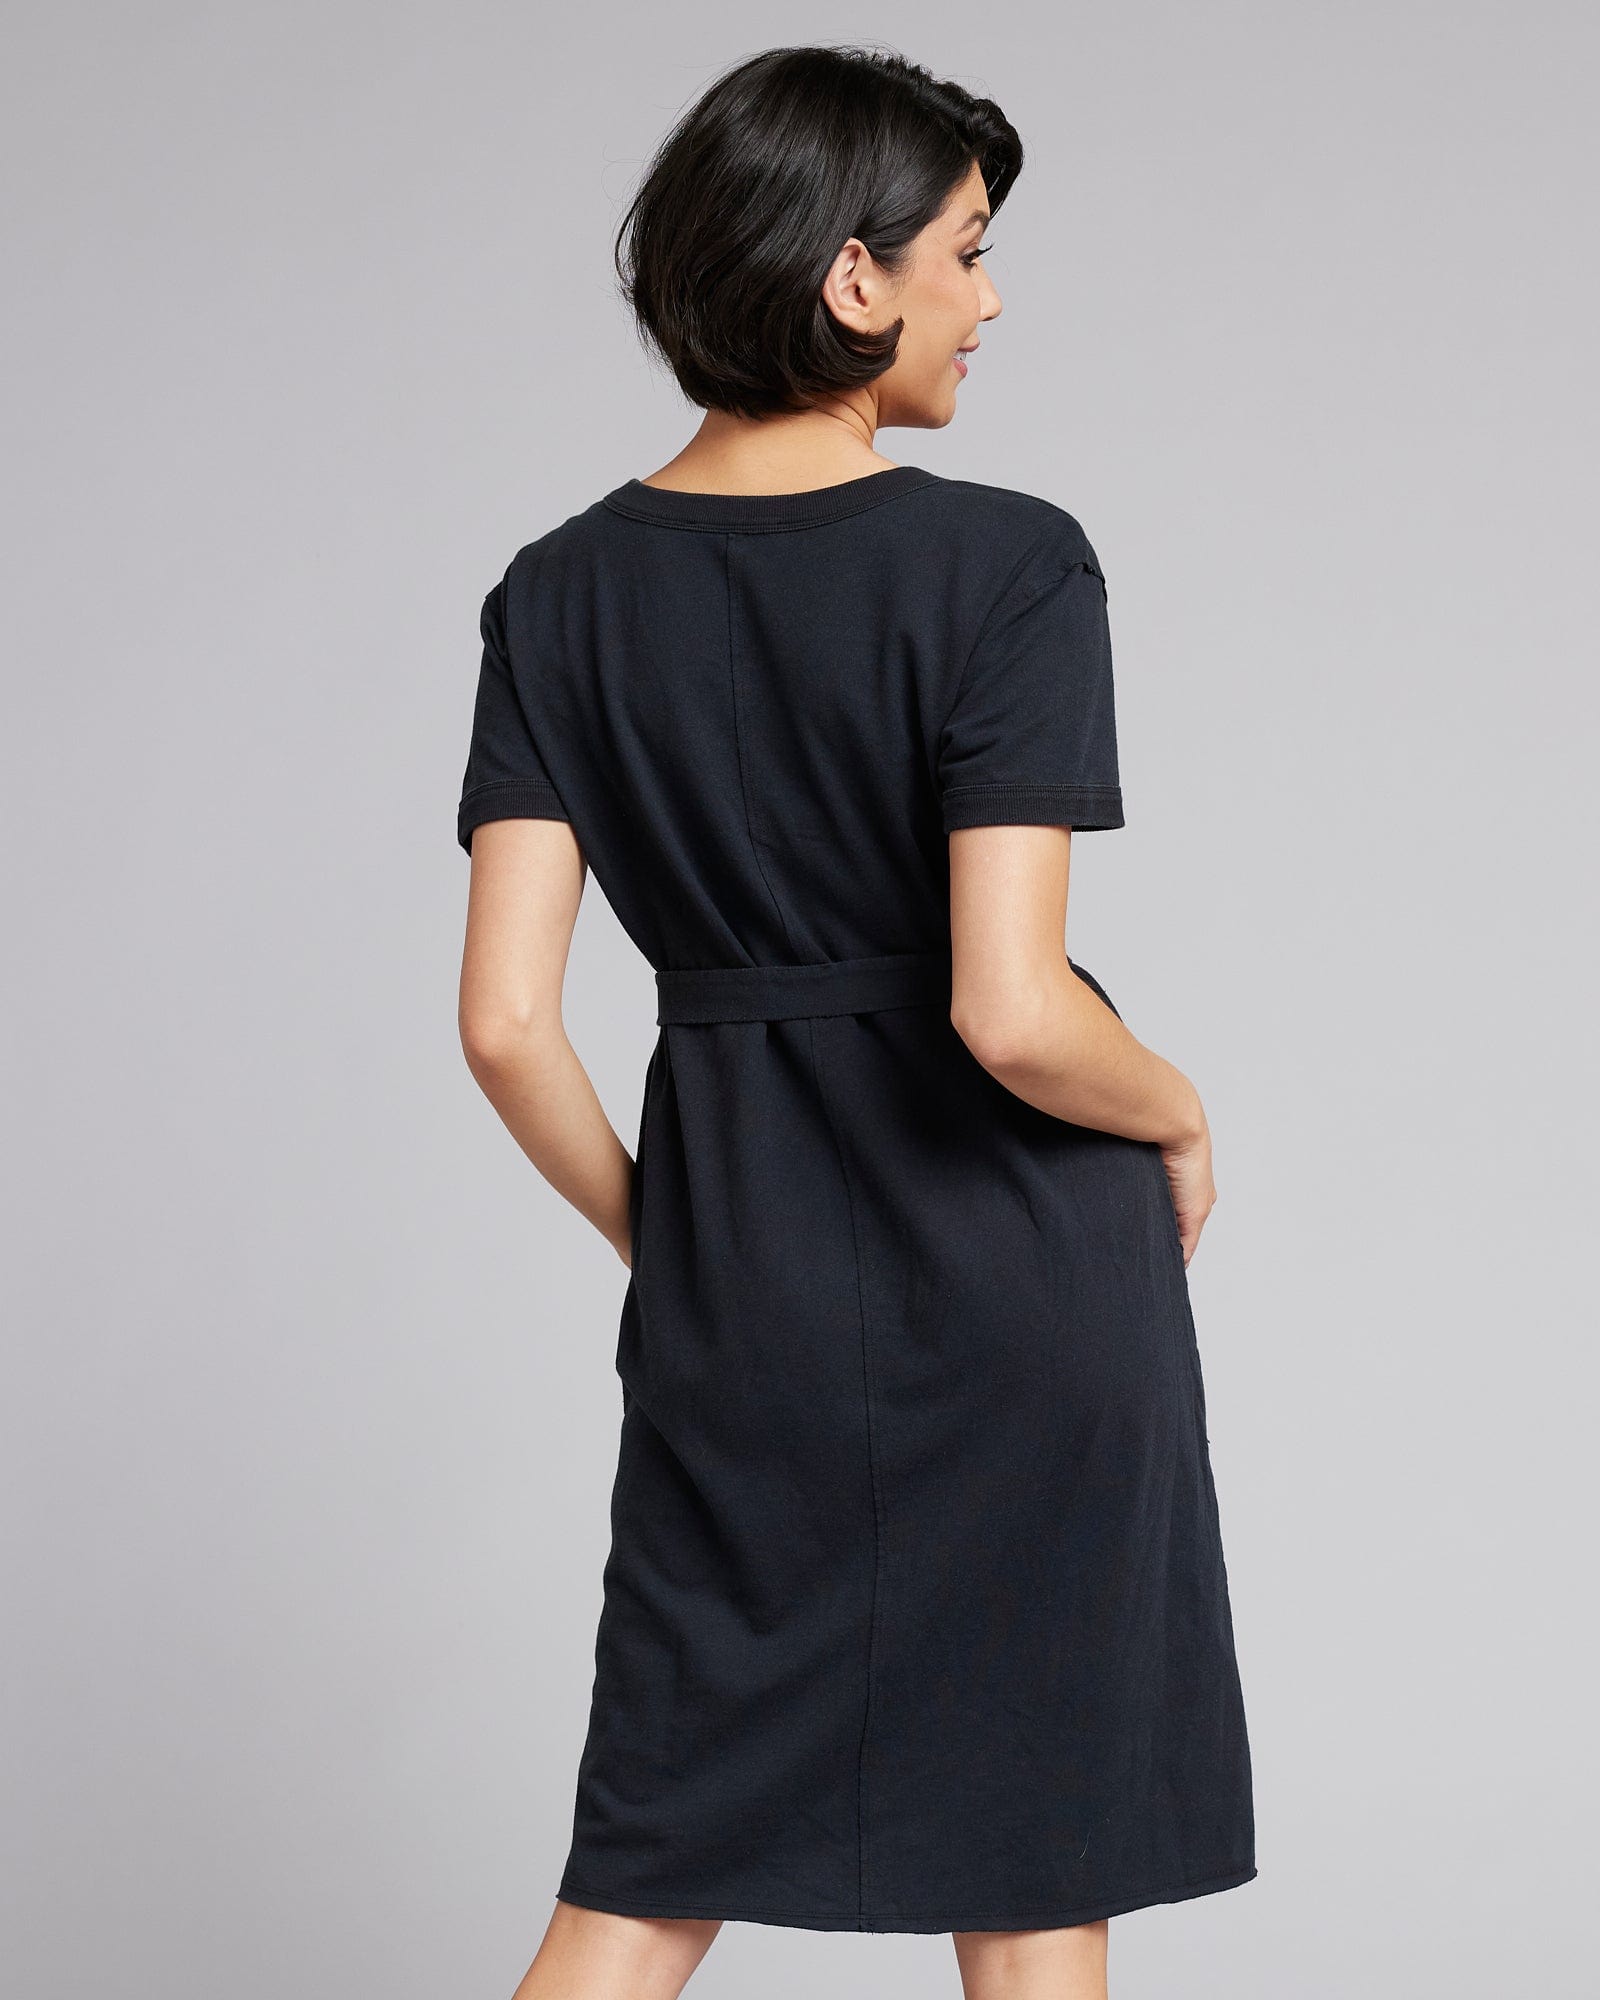 Woman in a short sleeve, knee-length, v-neck black dress